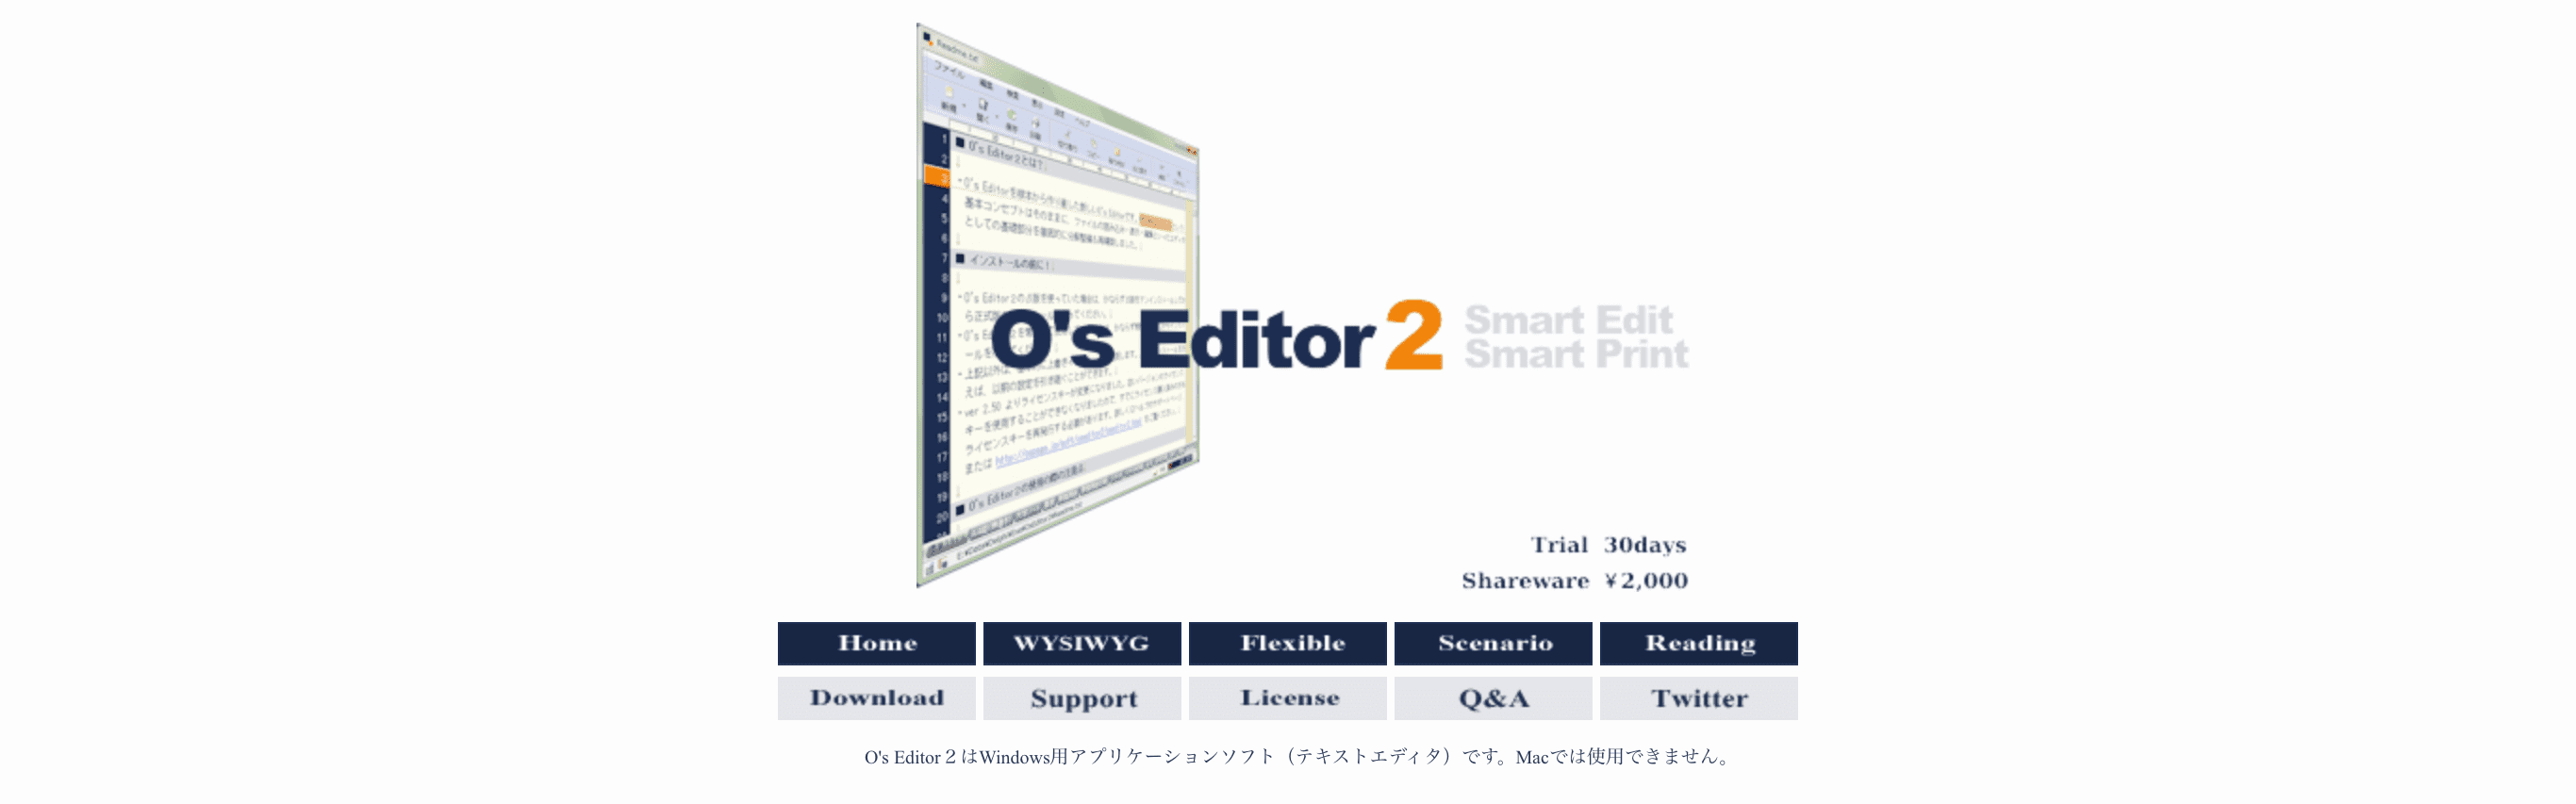 O’s Editor